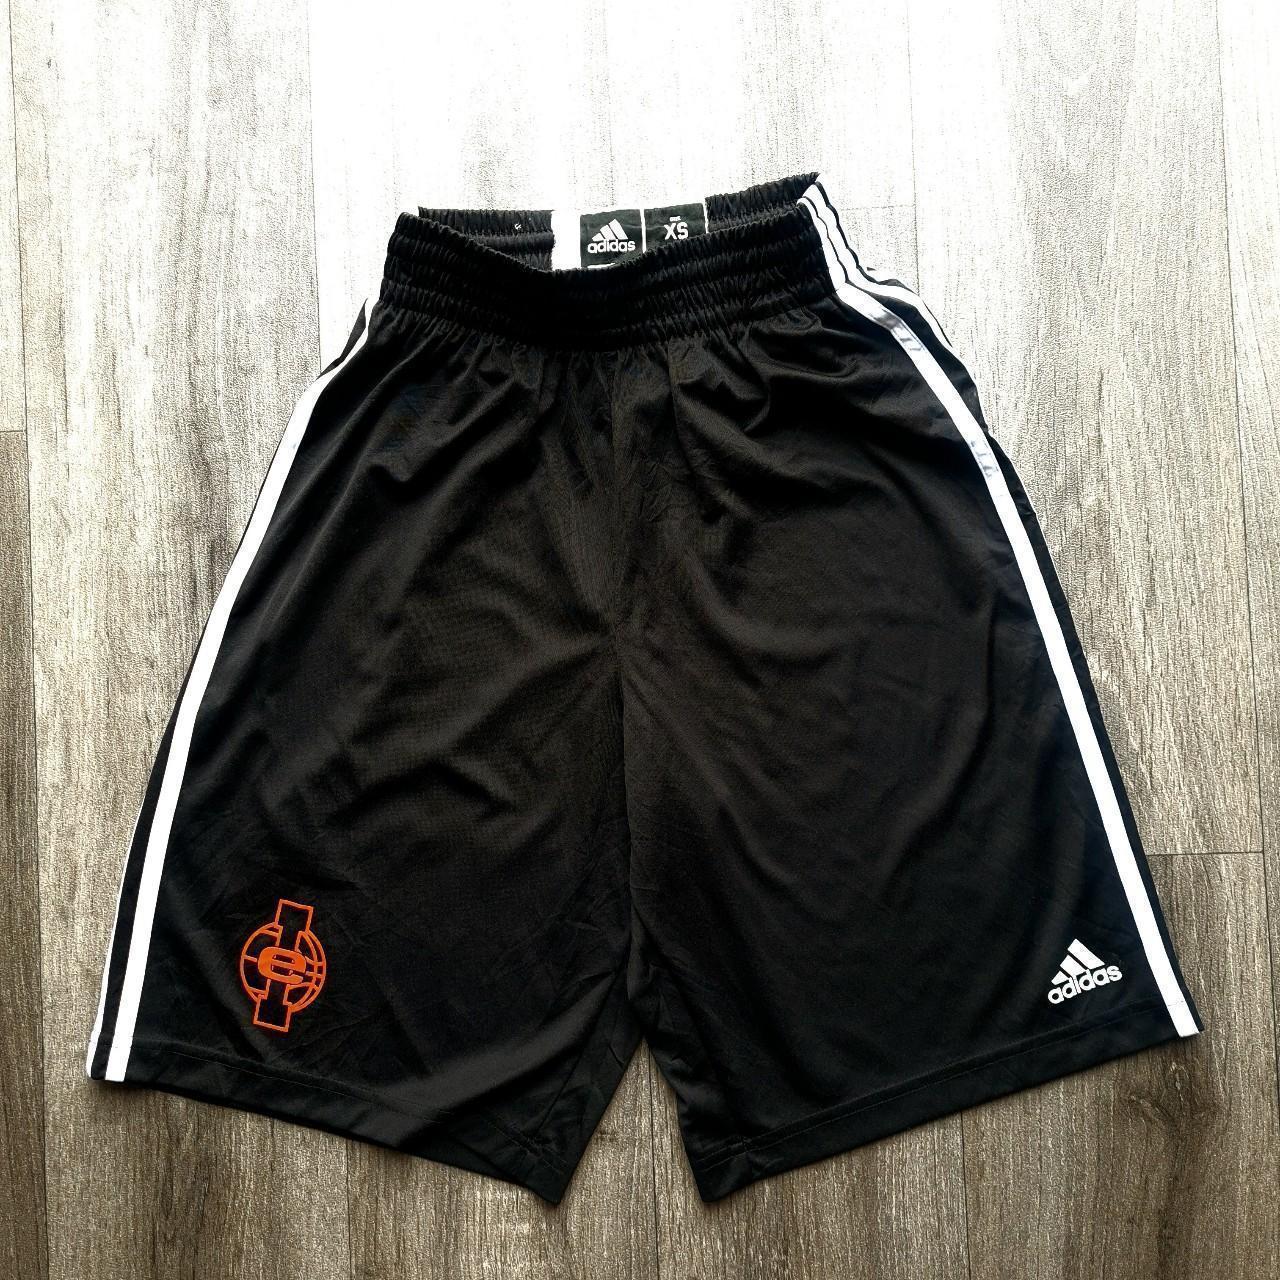 Adidas Clima cool black sport shorts. Size XS / S... - Depop